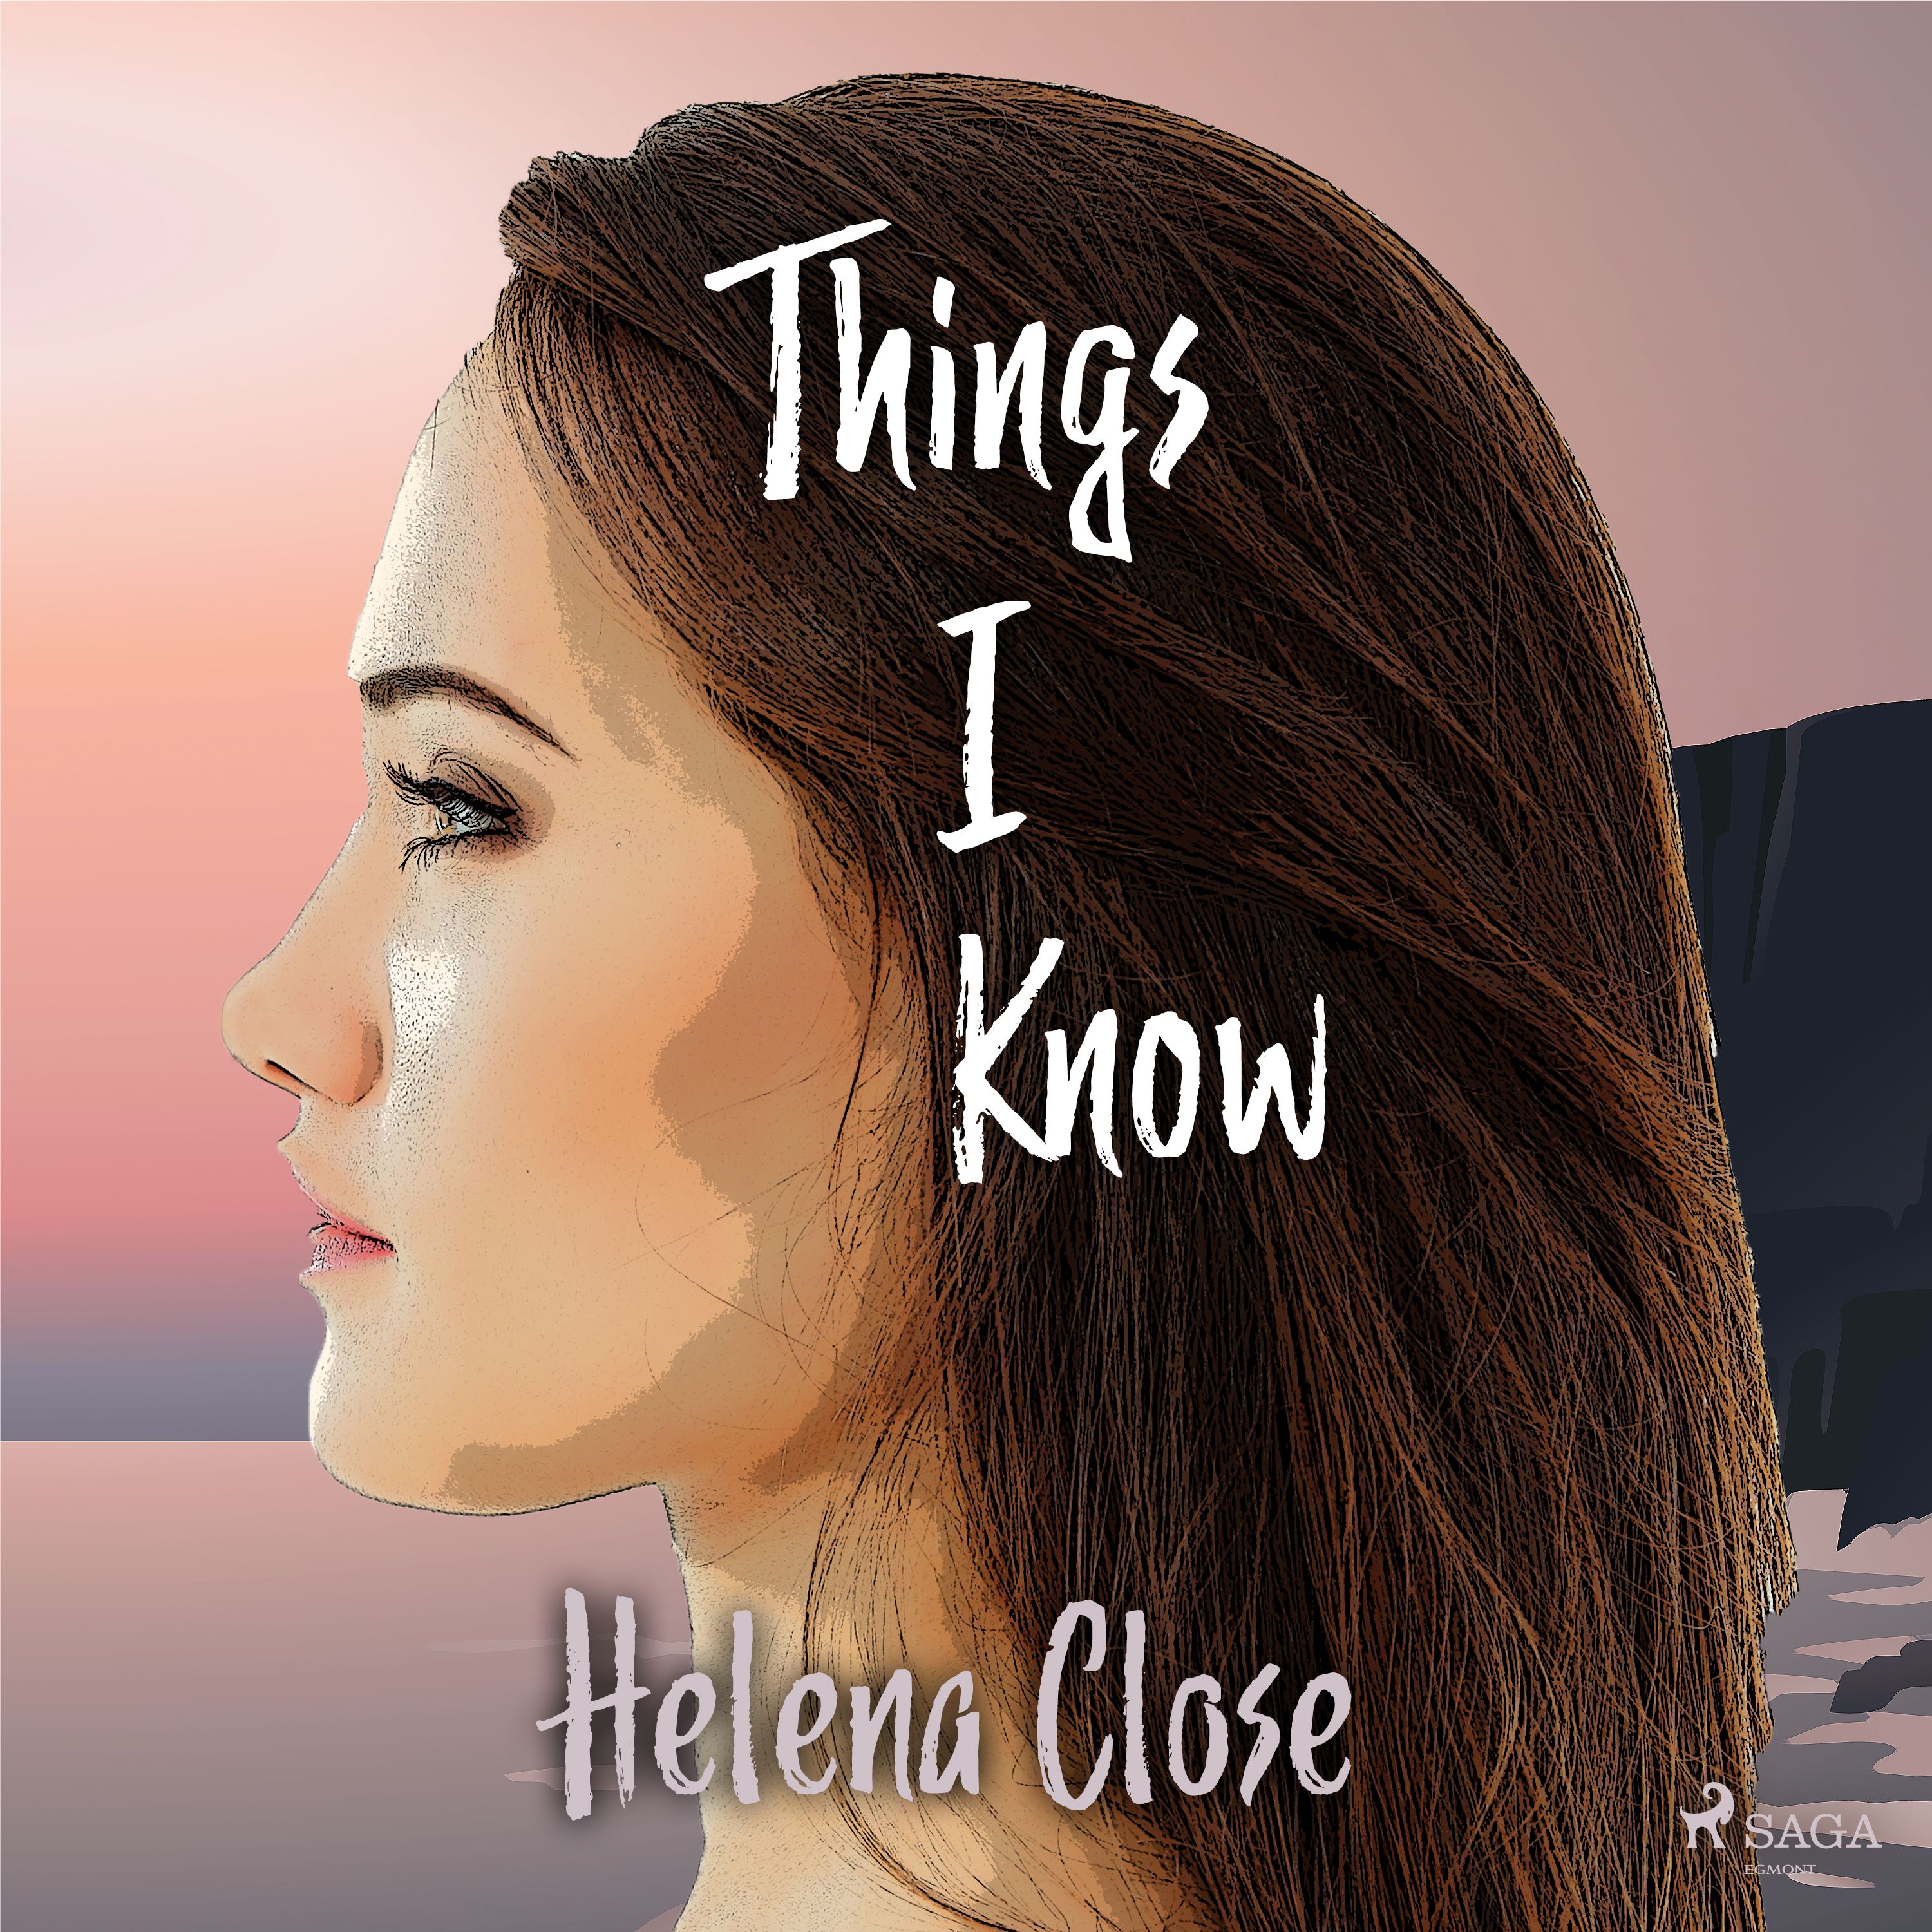 Things I Know, ljudbok av Helena Close